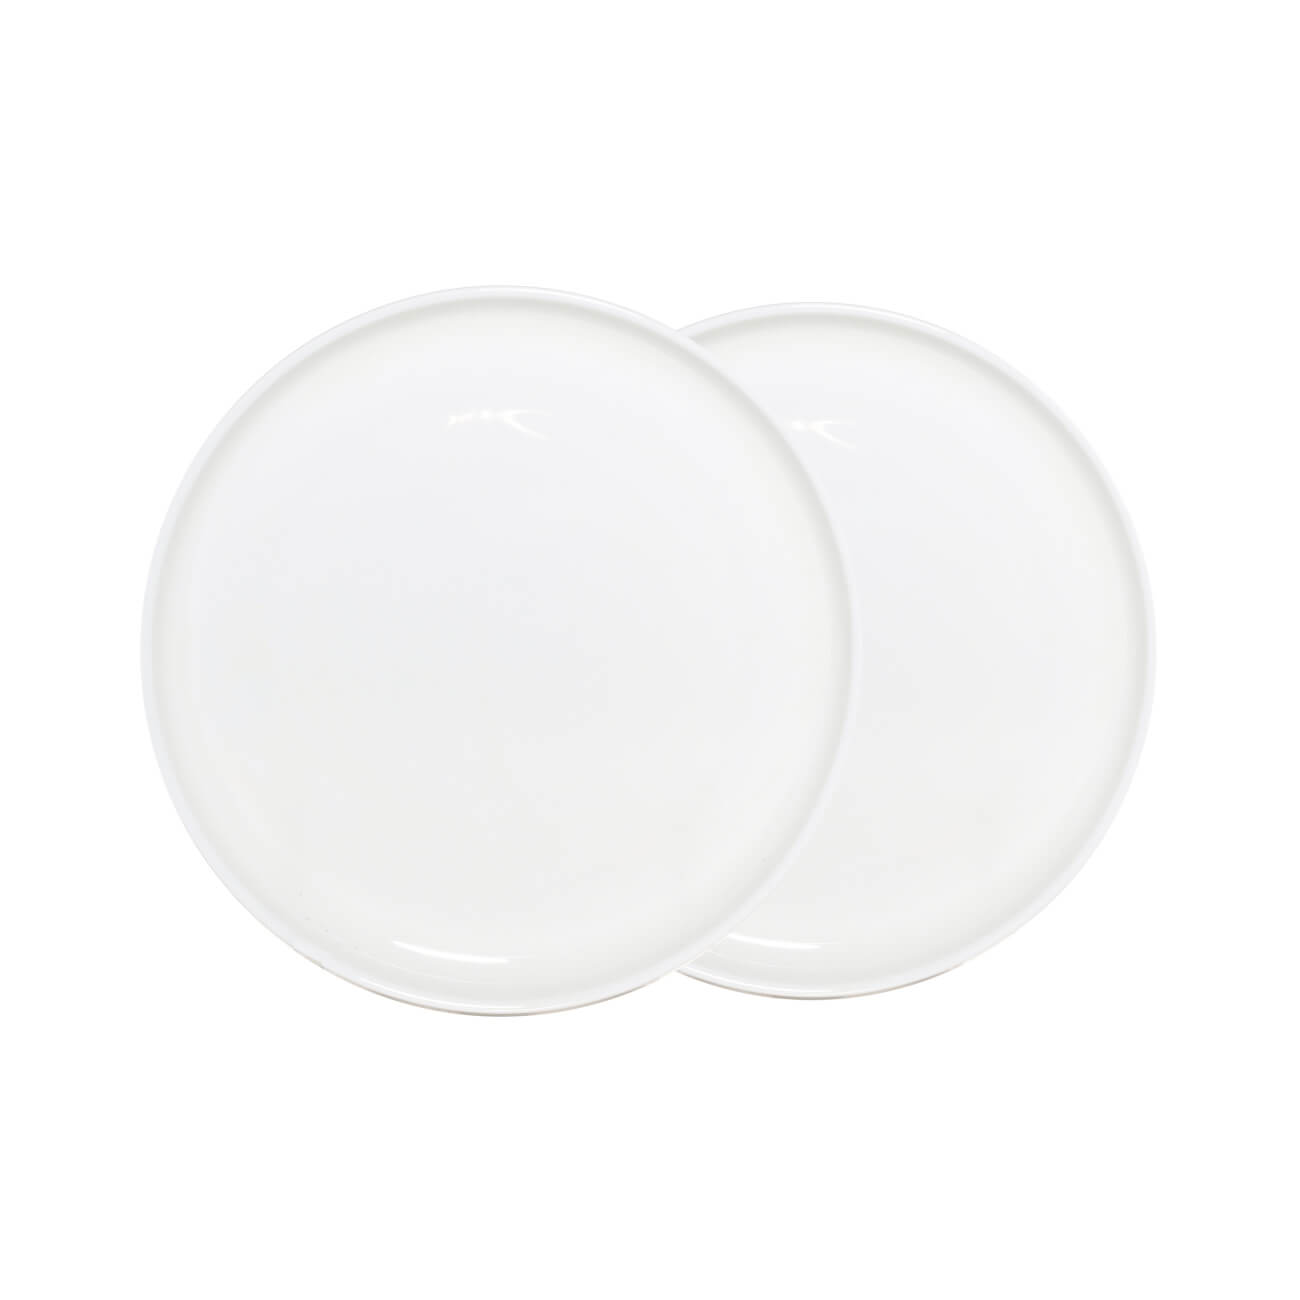 Тарелка десертная, 20 см, 2 шт, фарфор F, белая, Ideal white